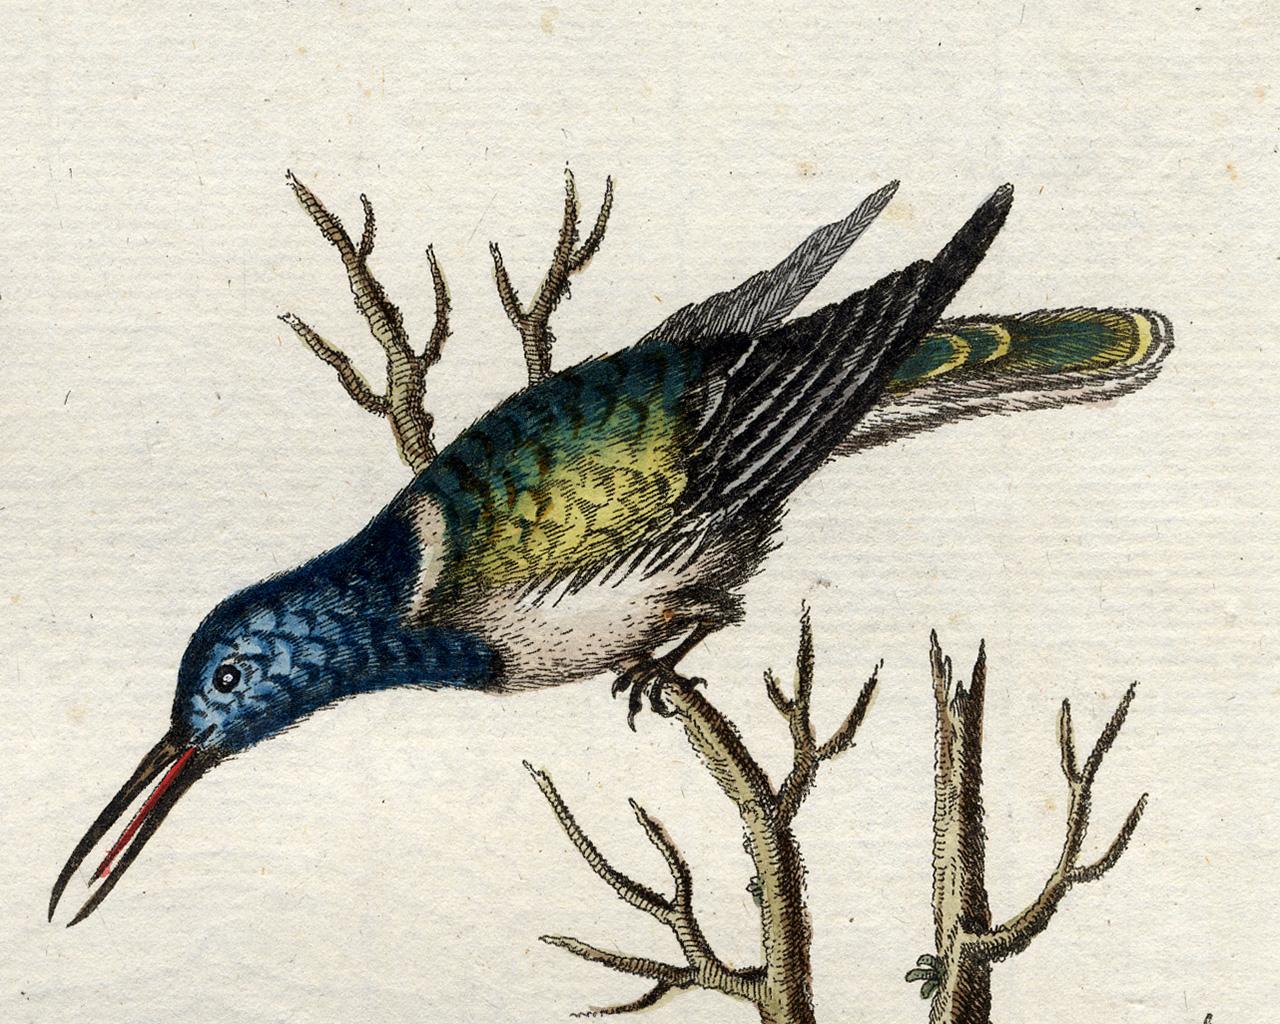 Green and Blue Hummingbird by Seligmann - Handcoloured etching - 18th century - Beige Animal Print by Johann Michael Seligmann